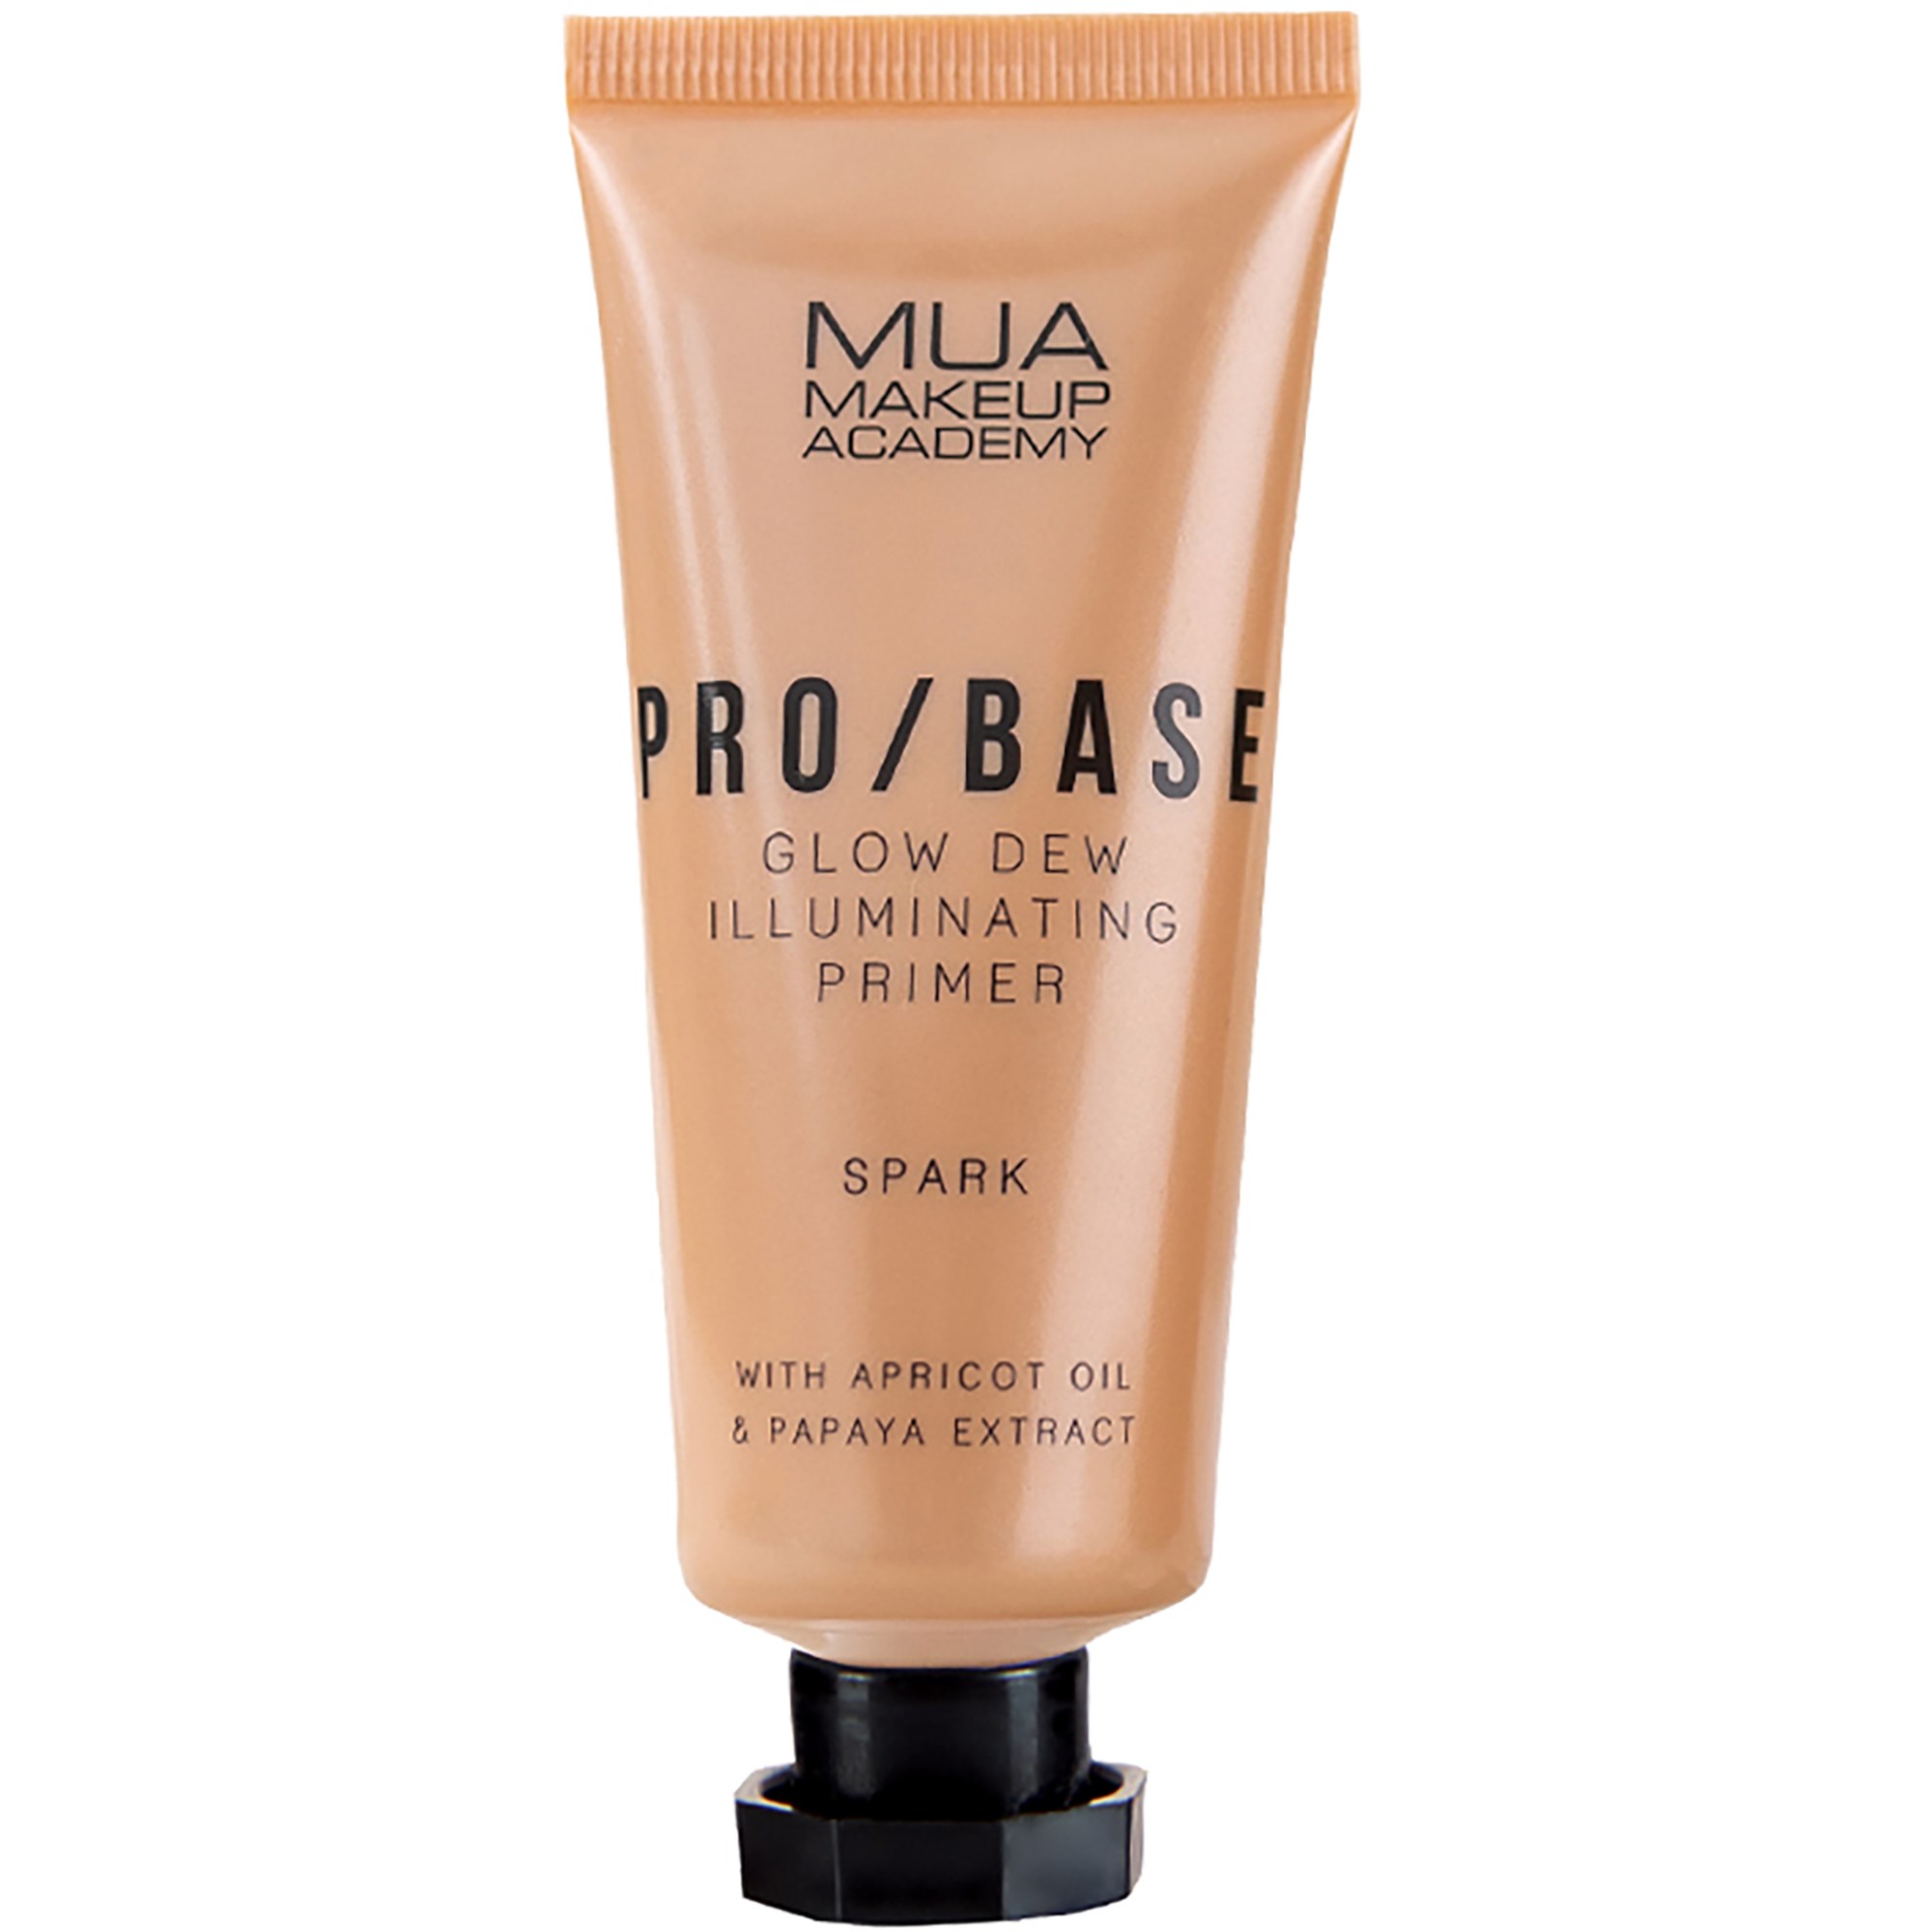 Läs mer om MUA Makeup Academy PRO/BASE Glow Dew Illuminating Primer Spark